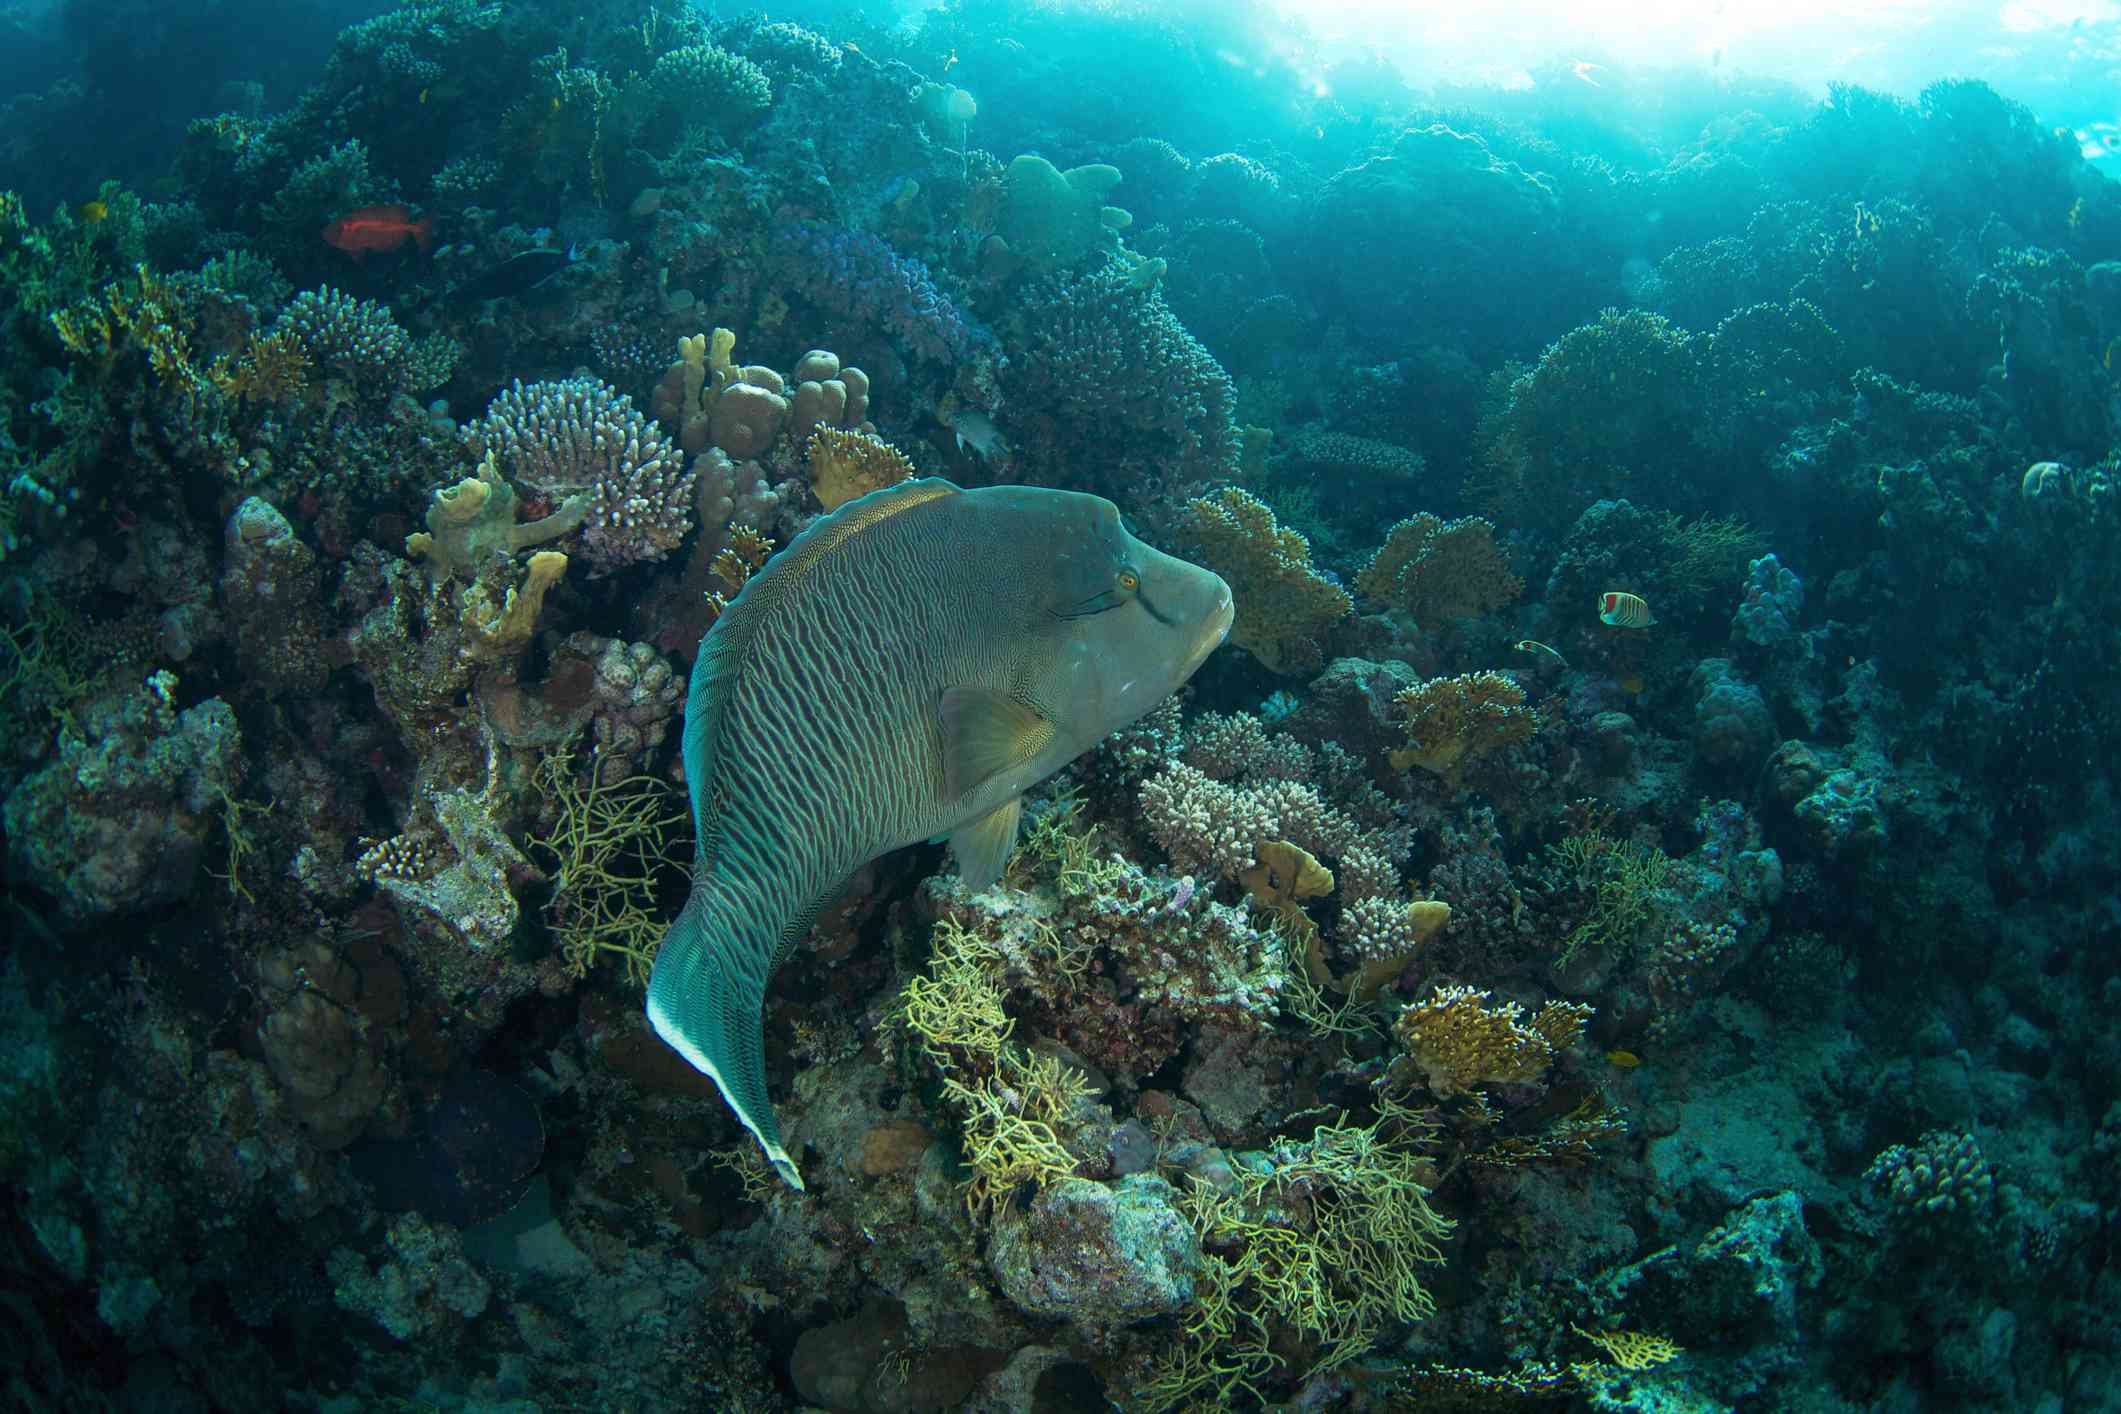 Humphead在其珊瑚礁栖息地中“width=